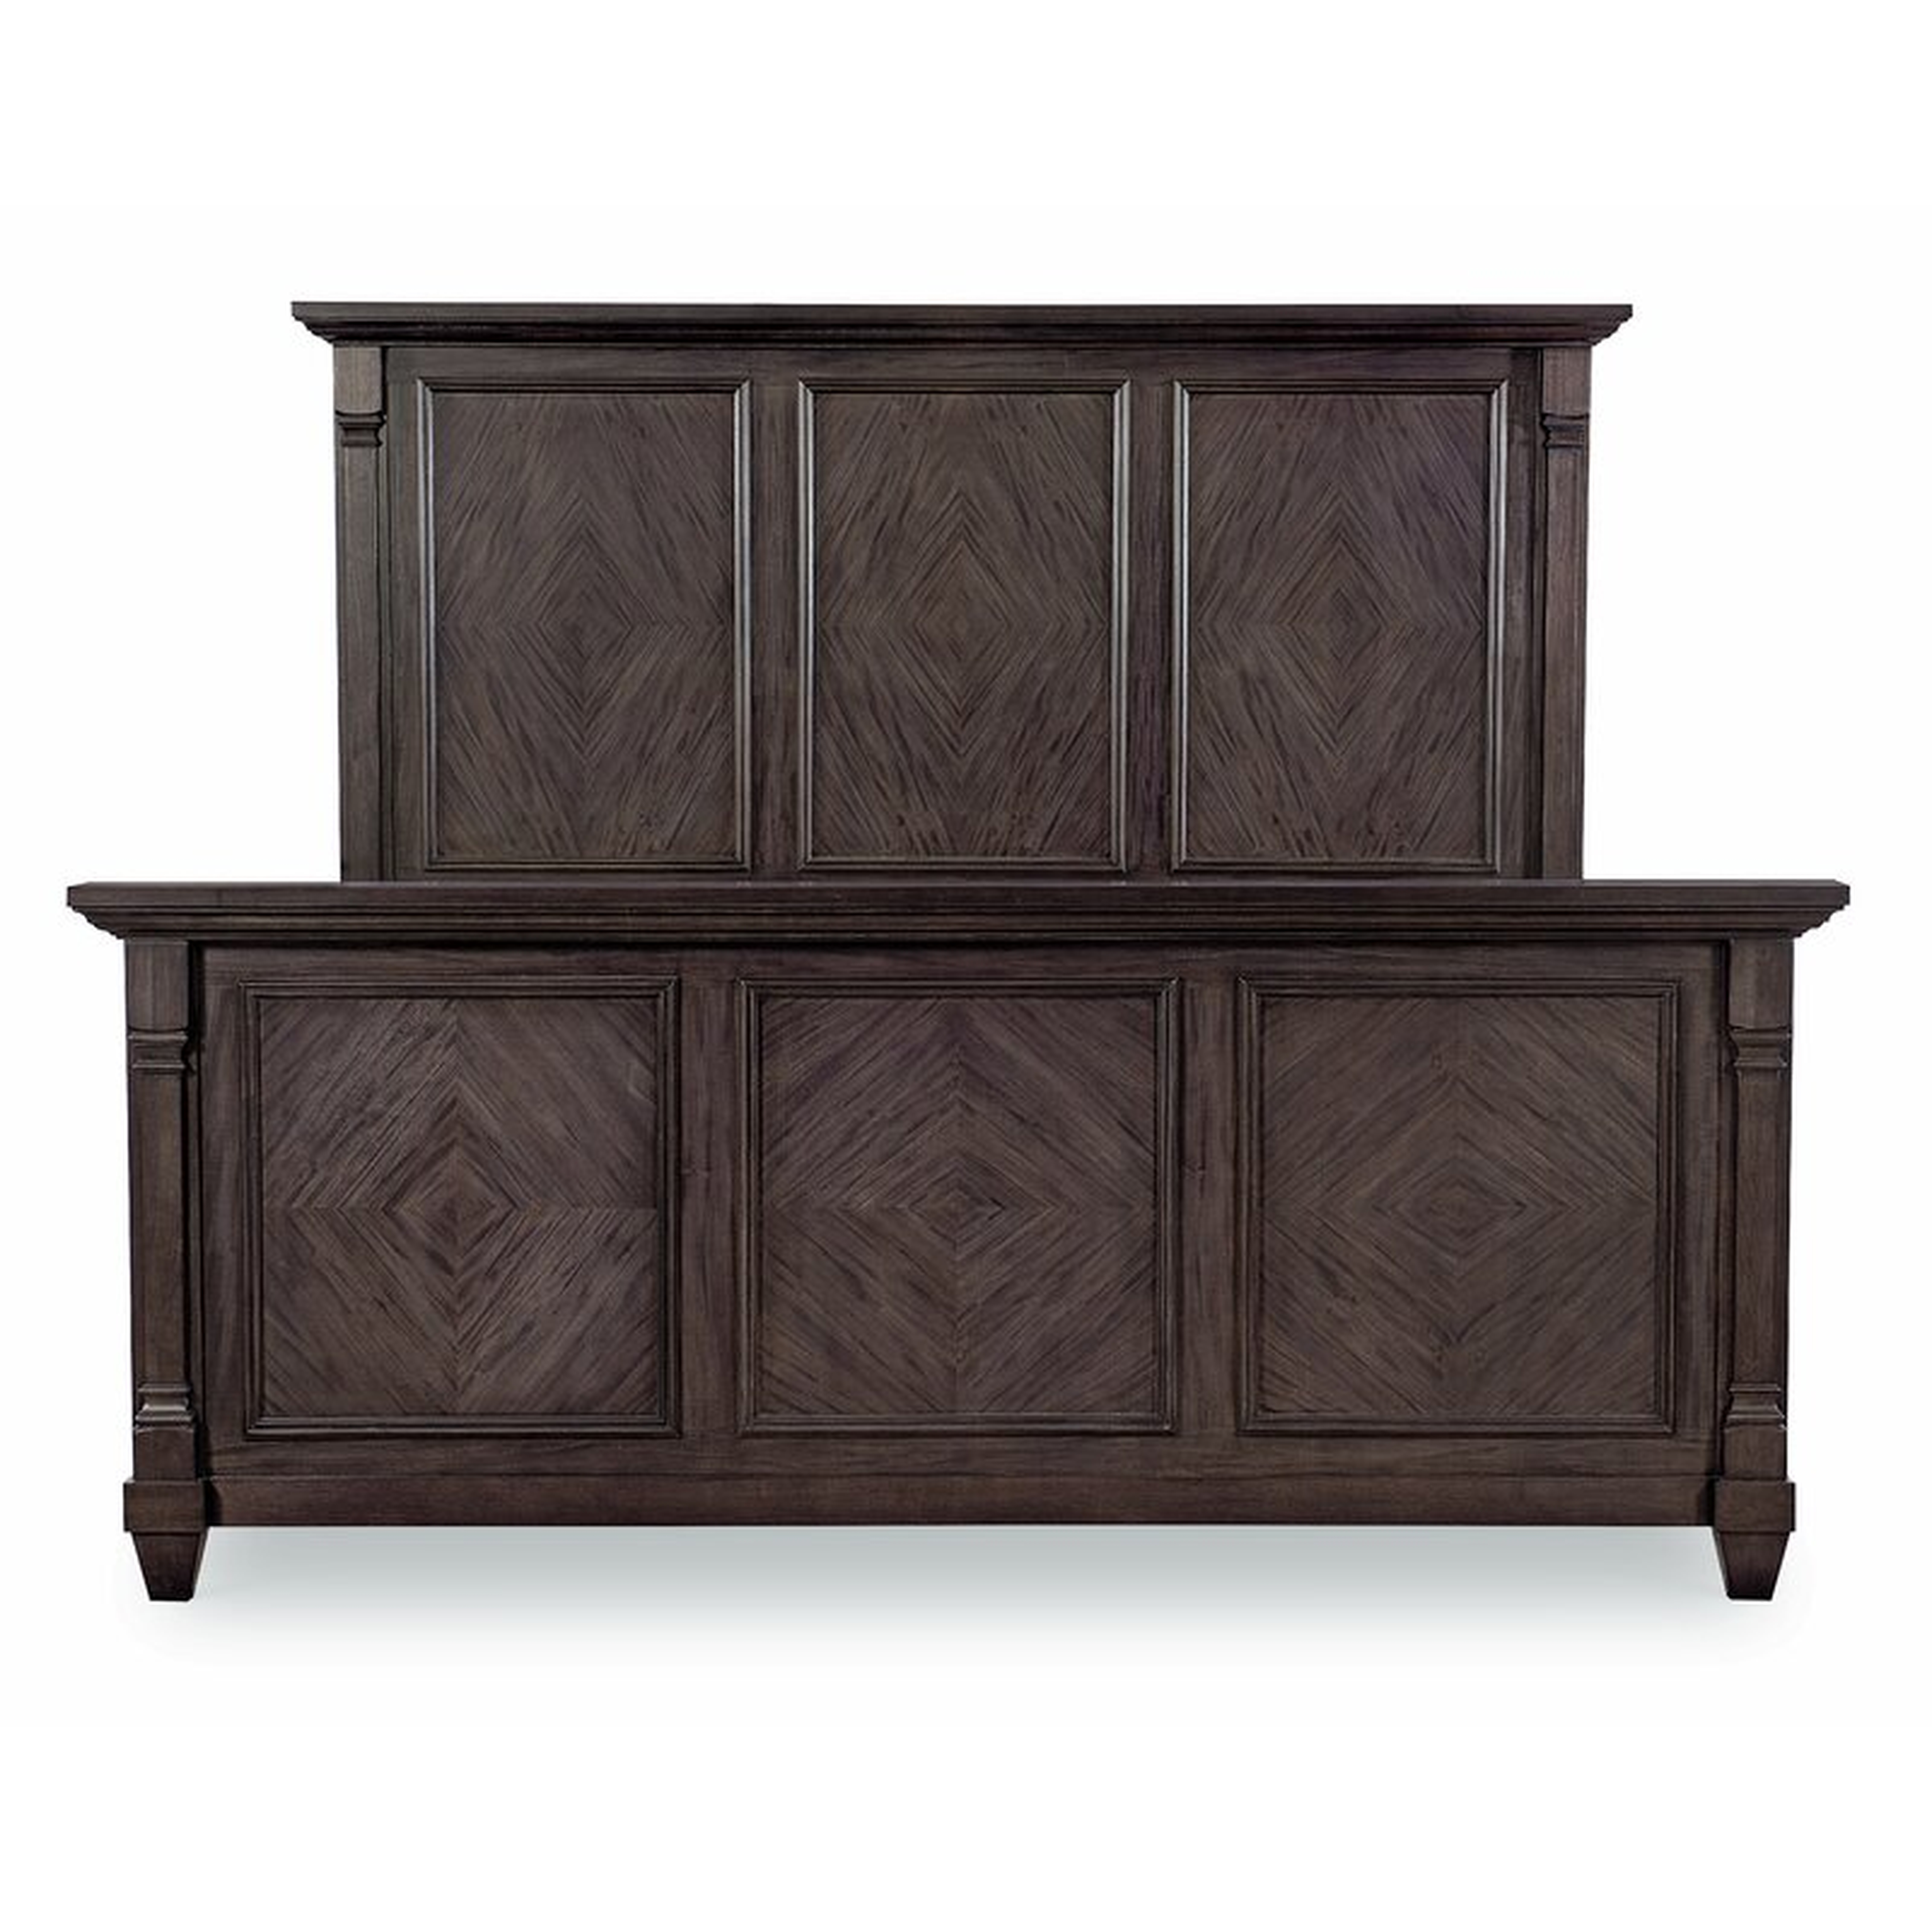 Fine Furniture Design Ashbrooke Upholstered Low Profile Sleigh Bed Size: King, Color: Dark Brown - Perigold